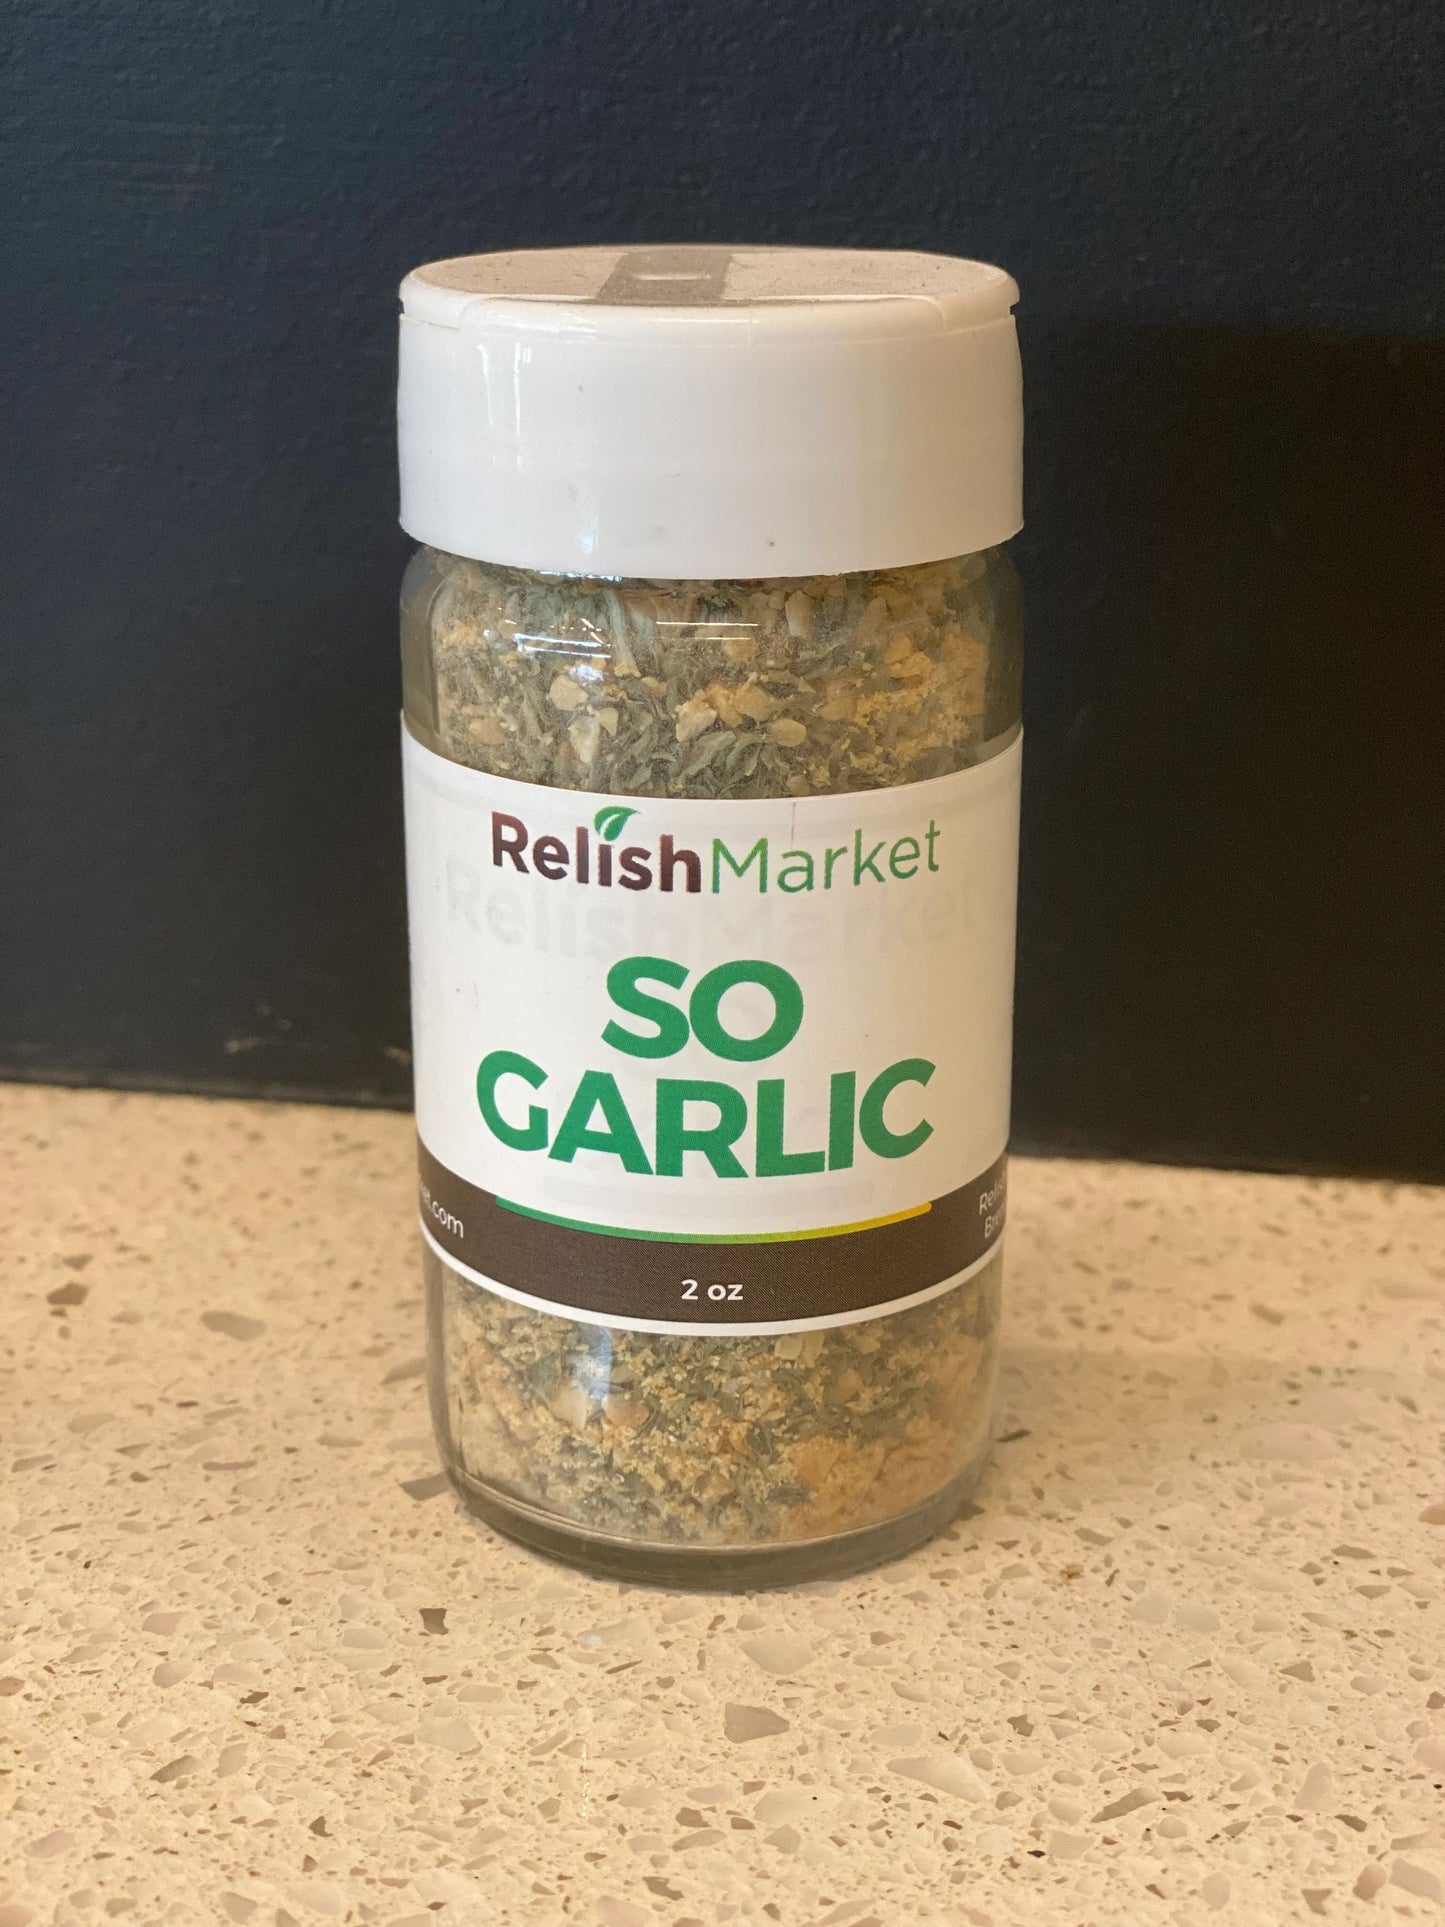 So Garlic